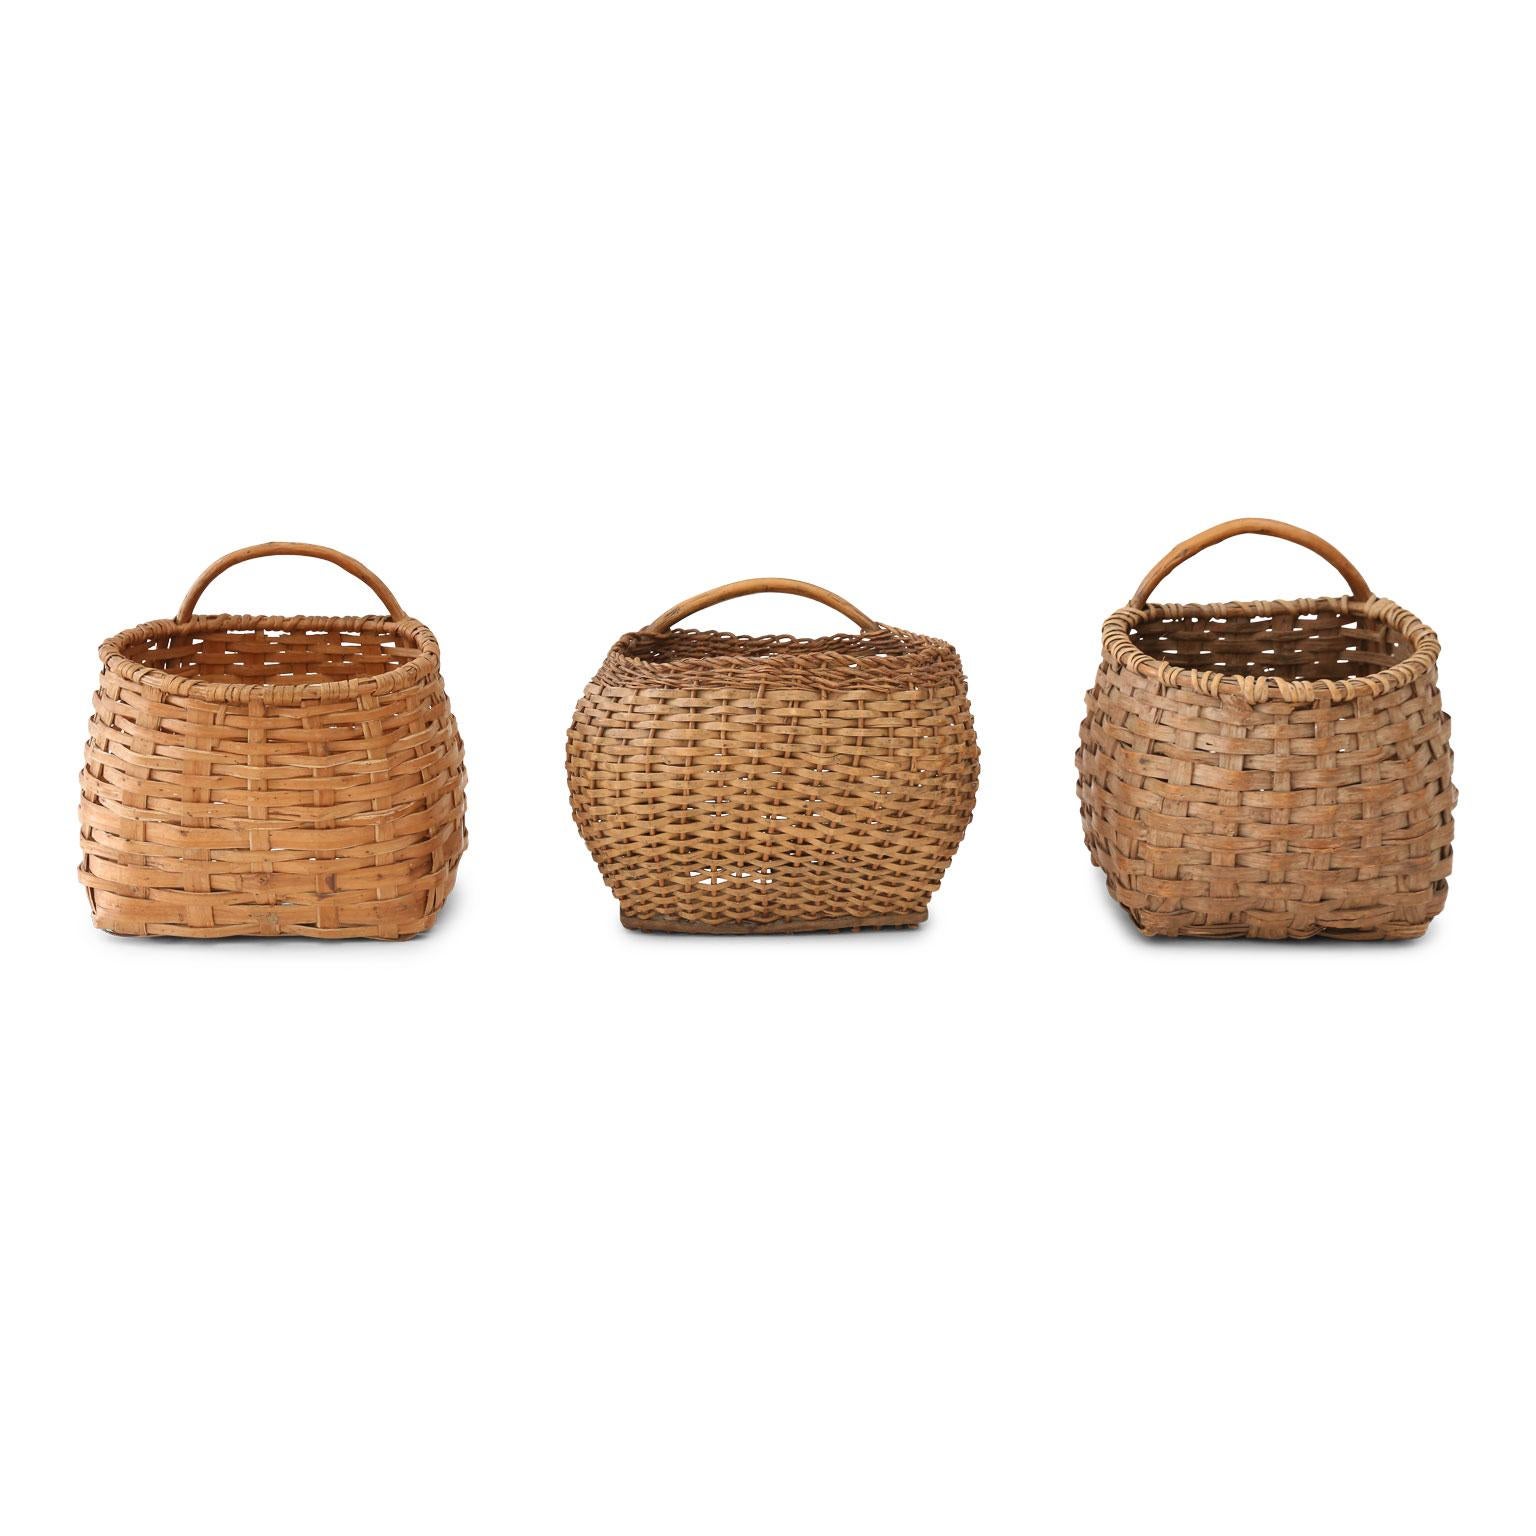 Three vintage Swedish baskets. Two baskets sold - see item LU984712672602 for remaining basket.
 